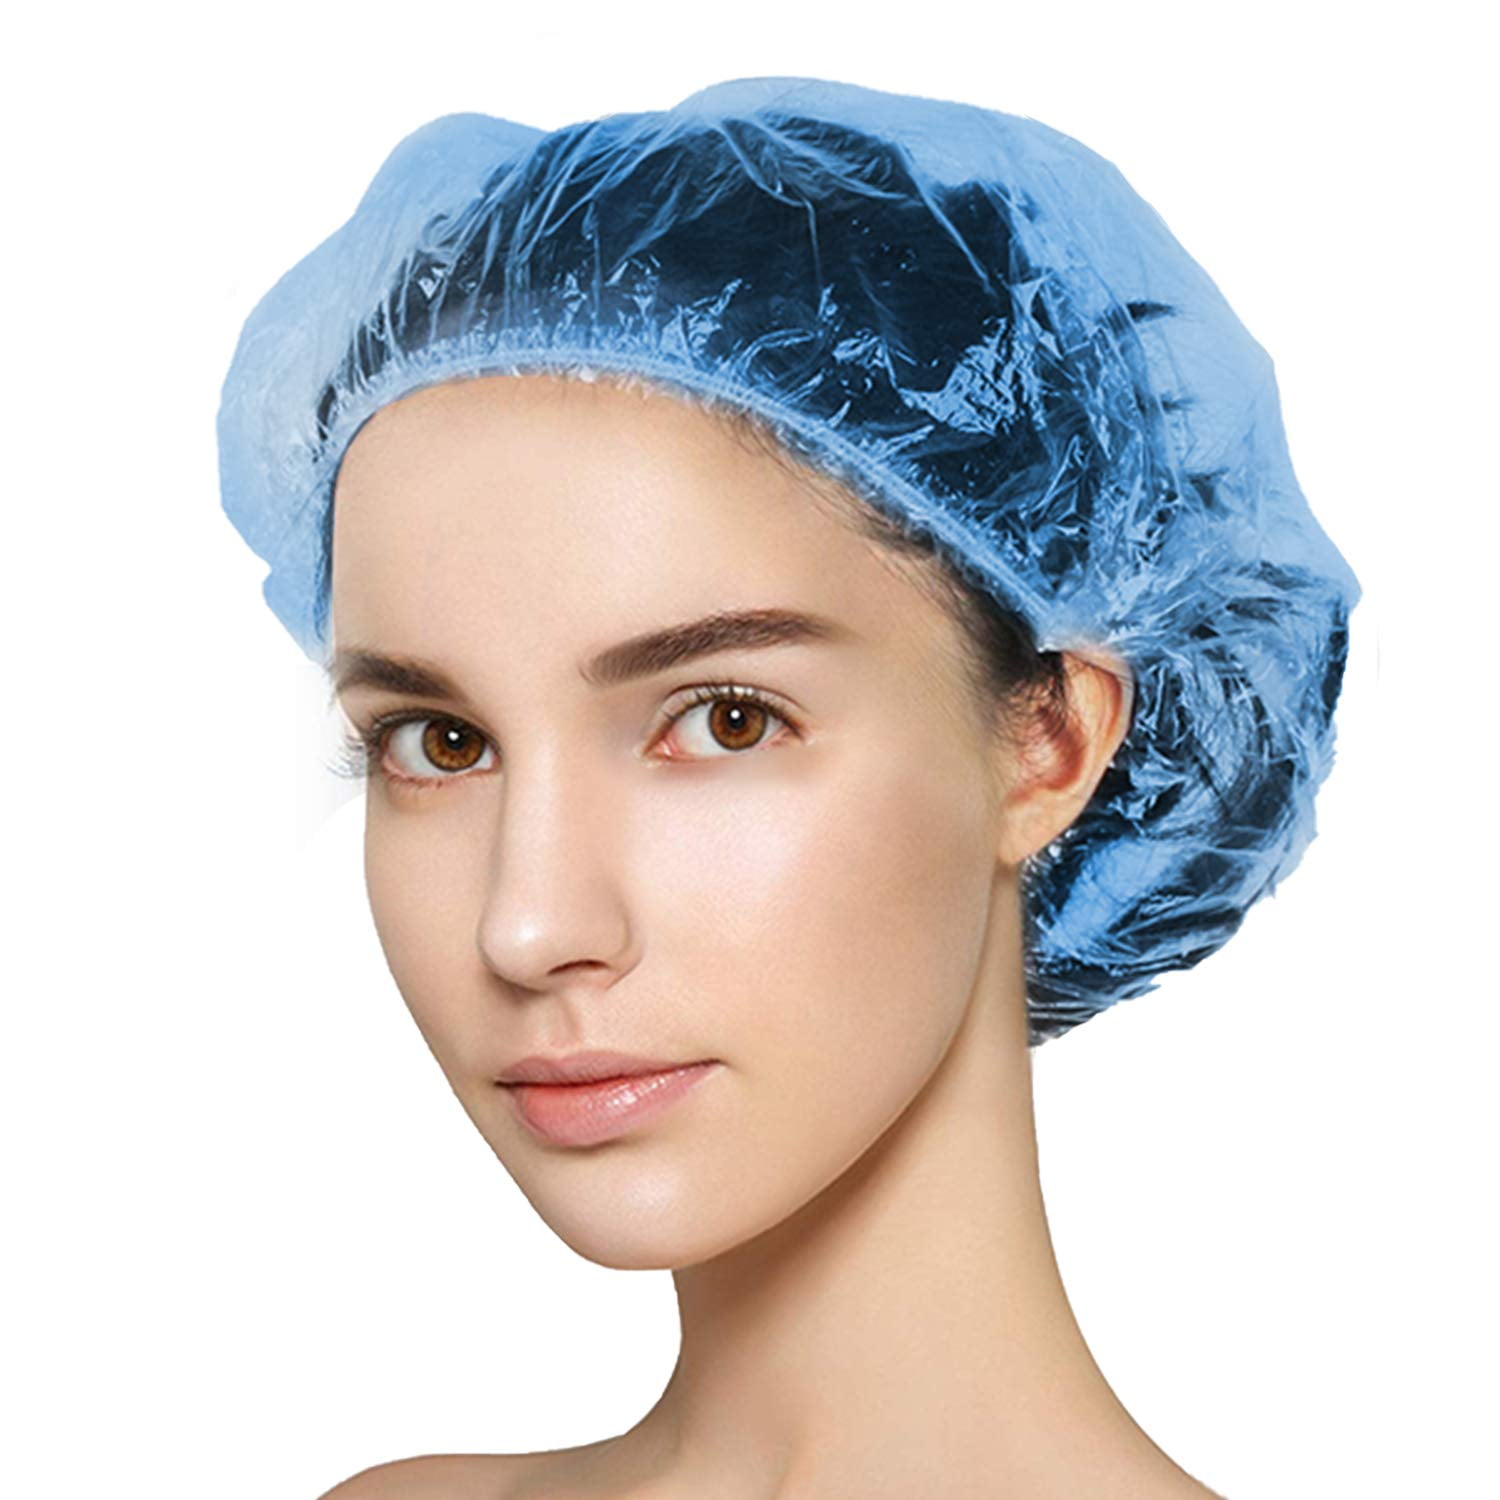 50 x Blue Mesh Hair Mob Cap Nets One Size